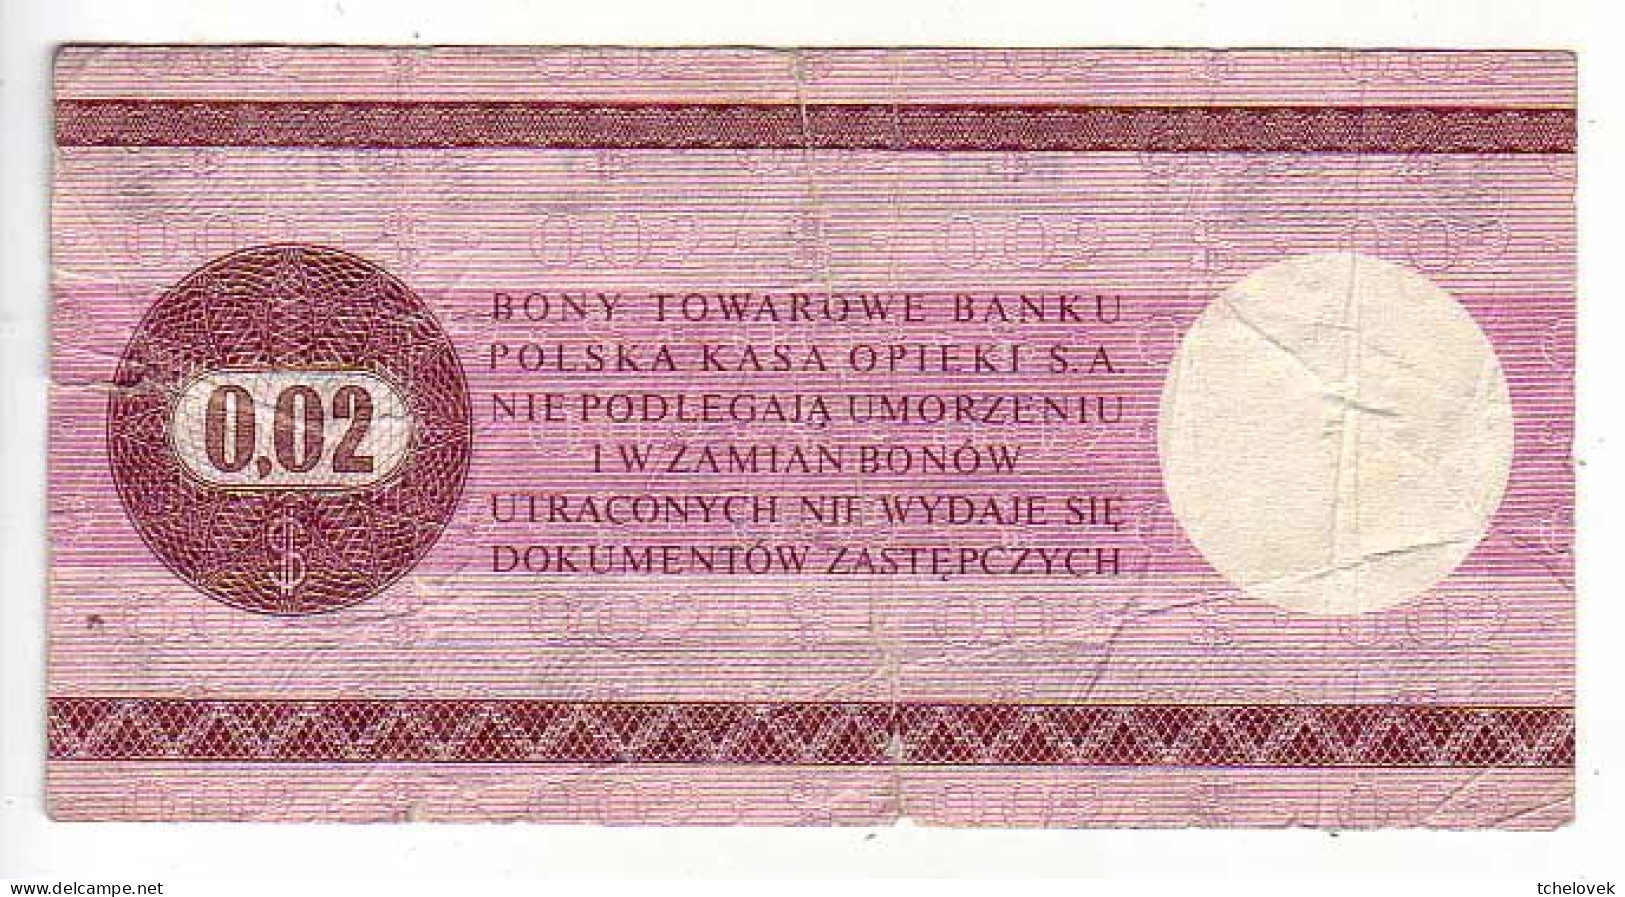 (Billets). Pologne. Communist Poland. Foreing Exchange Certificate. Bon Towarowy PKO 1 C 1979 HL 7457281 & 2c HO 3550148 - Poland